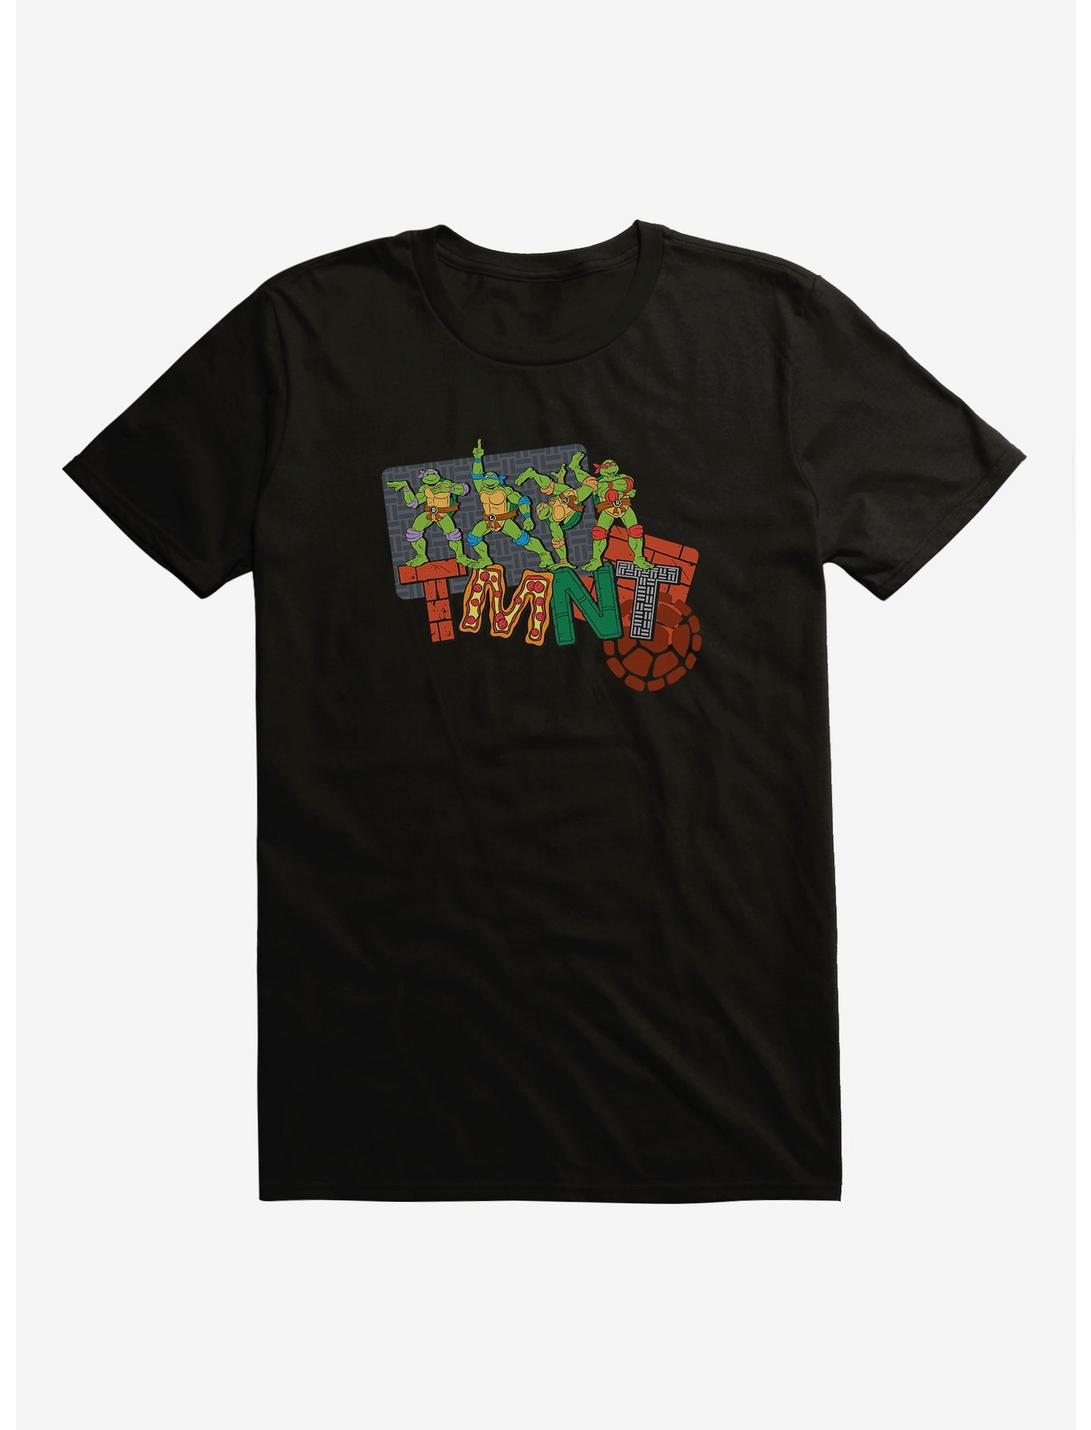 Teenage Mutant Ninja Turtles Patterned Logo Letters Group Black T-Shirt, BLACK, hi-res